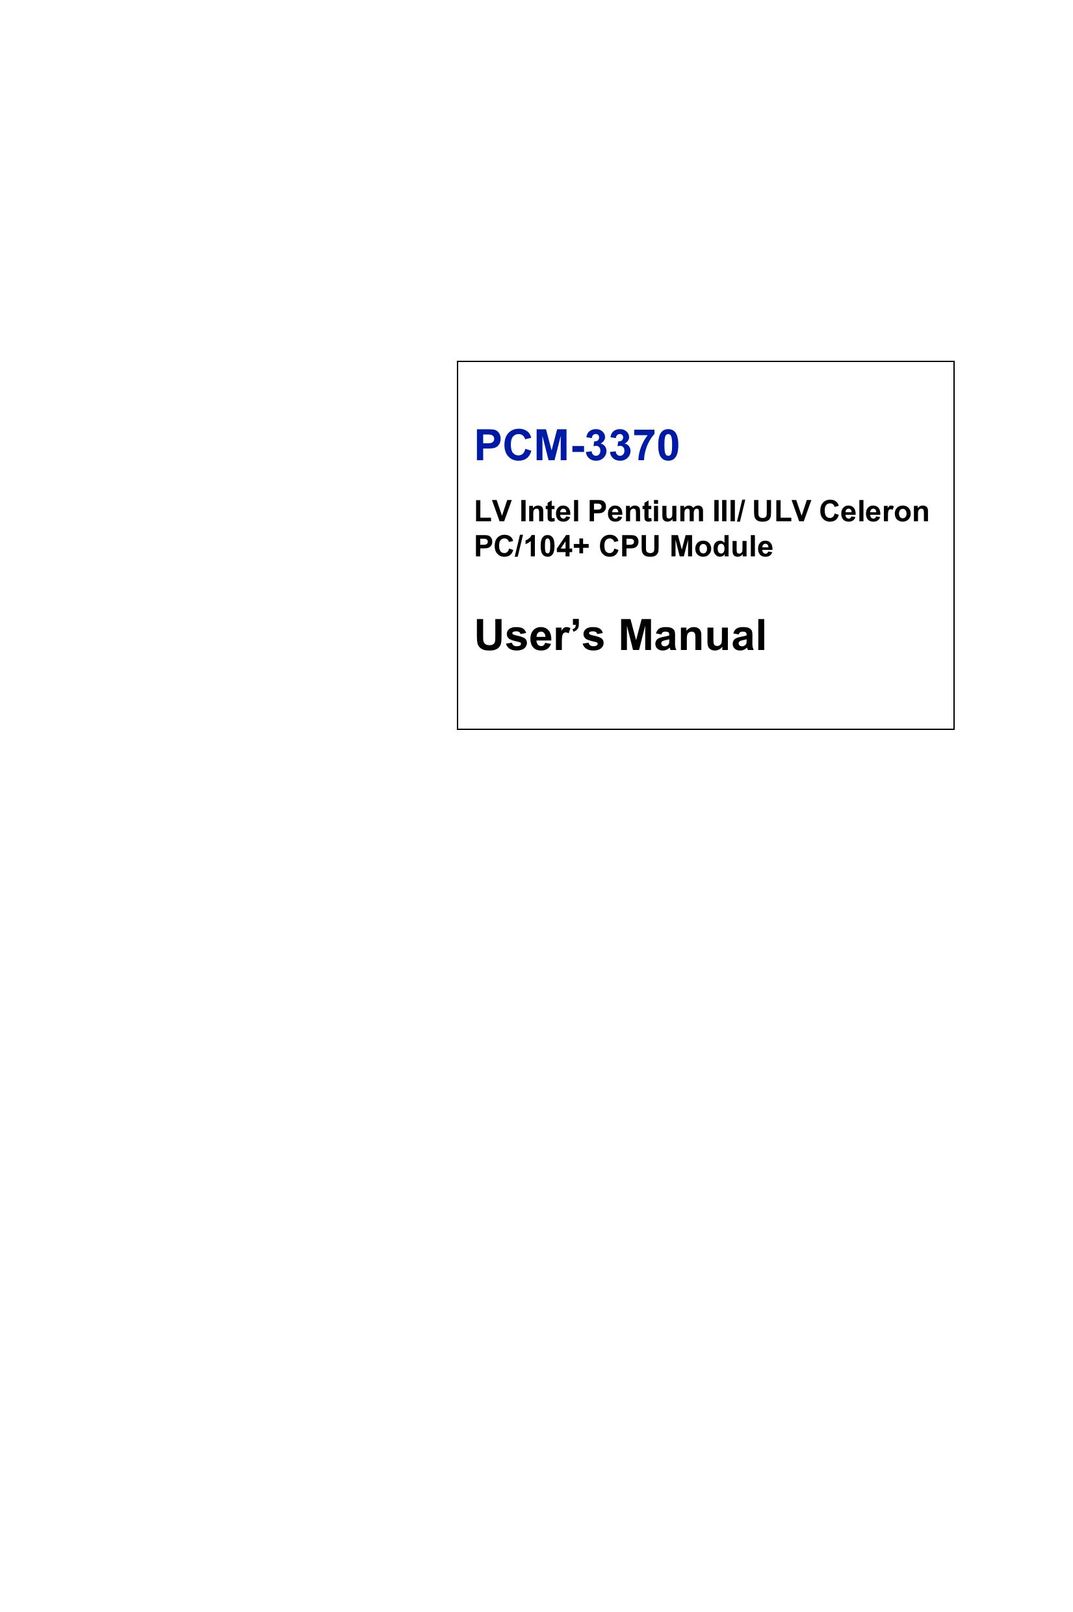 Intel PCM-3370 Personal Computer User Manual